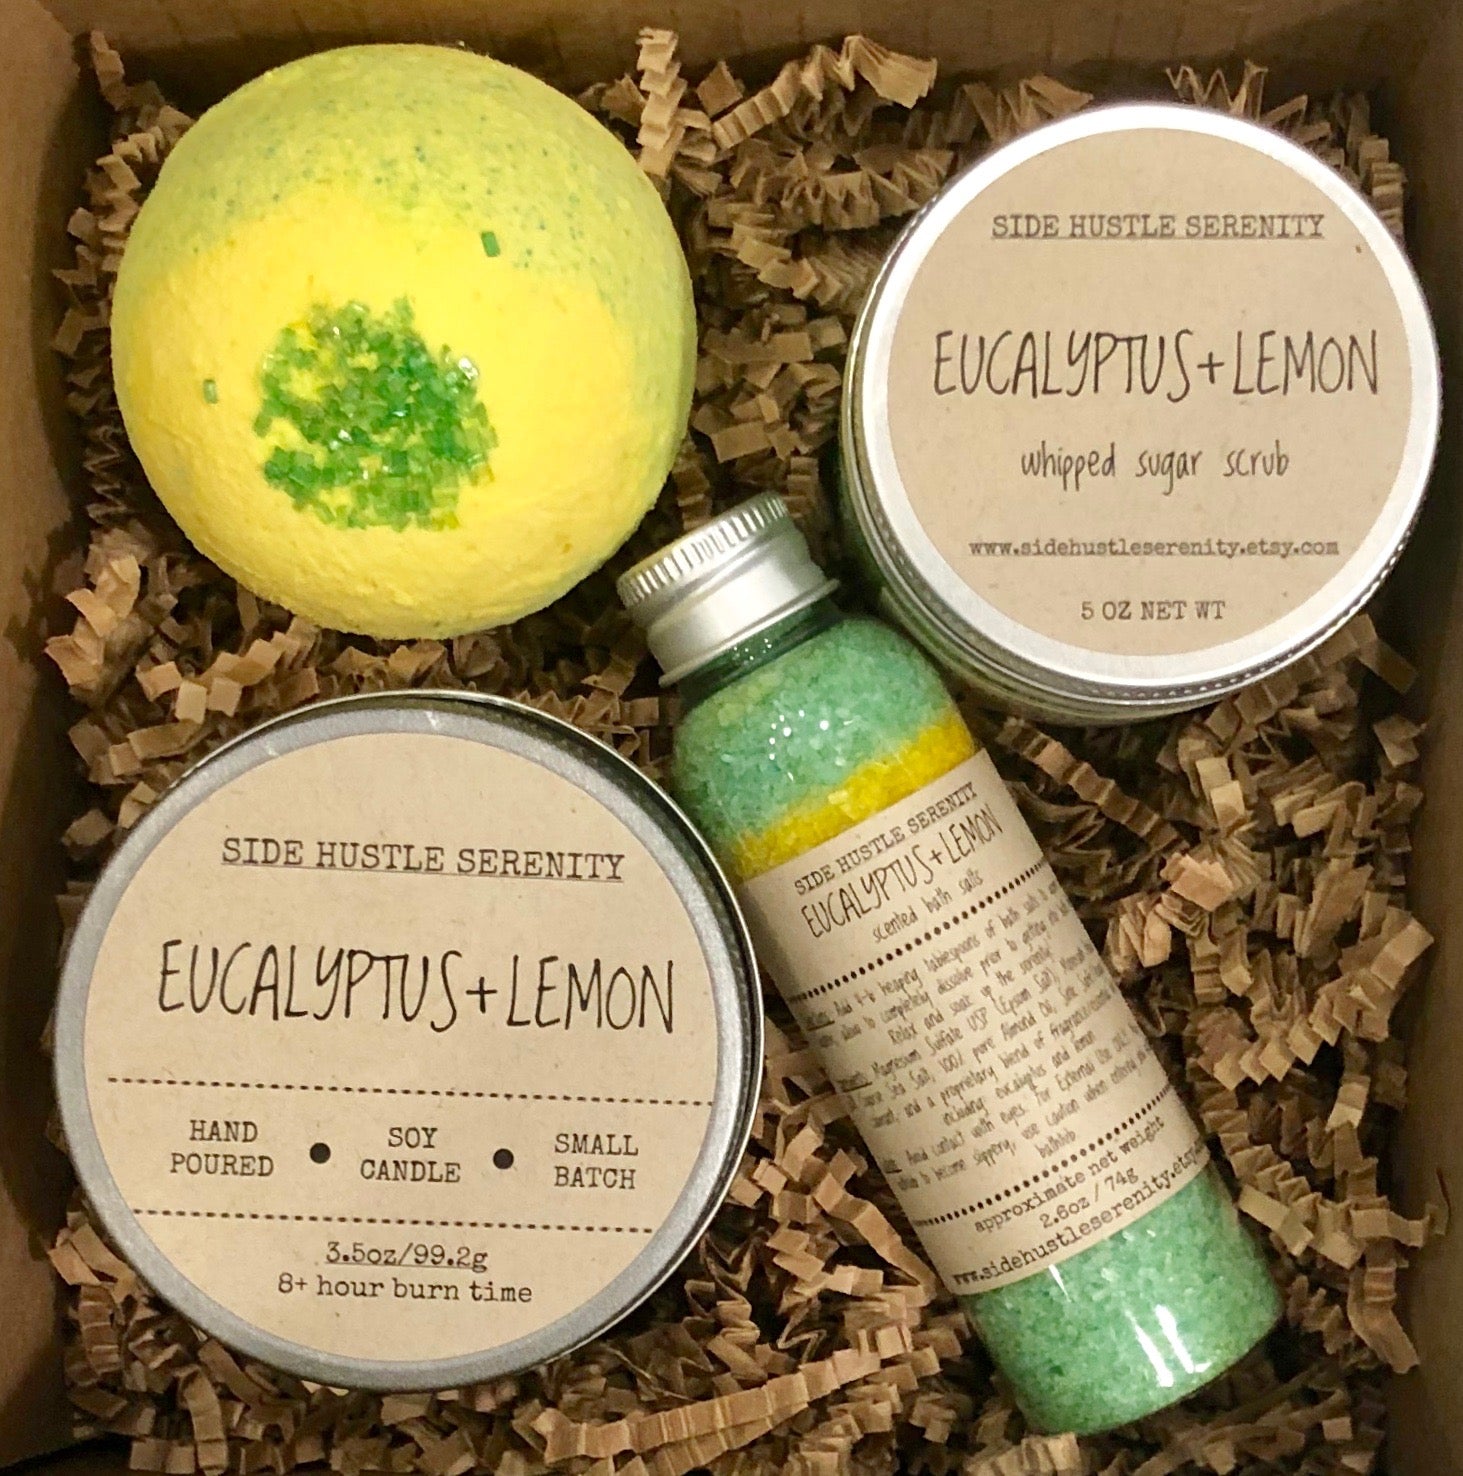 Whipped Sugar Scrub | Eucalyptus + Lemon - Side Hustle Serenity